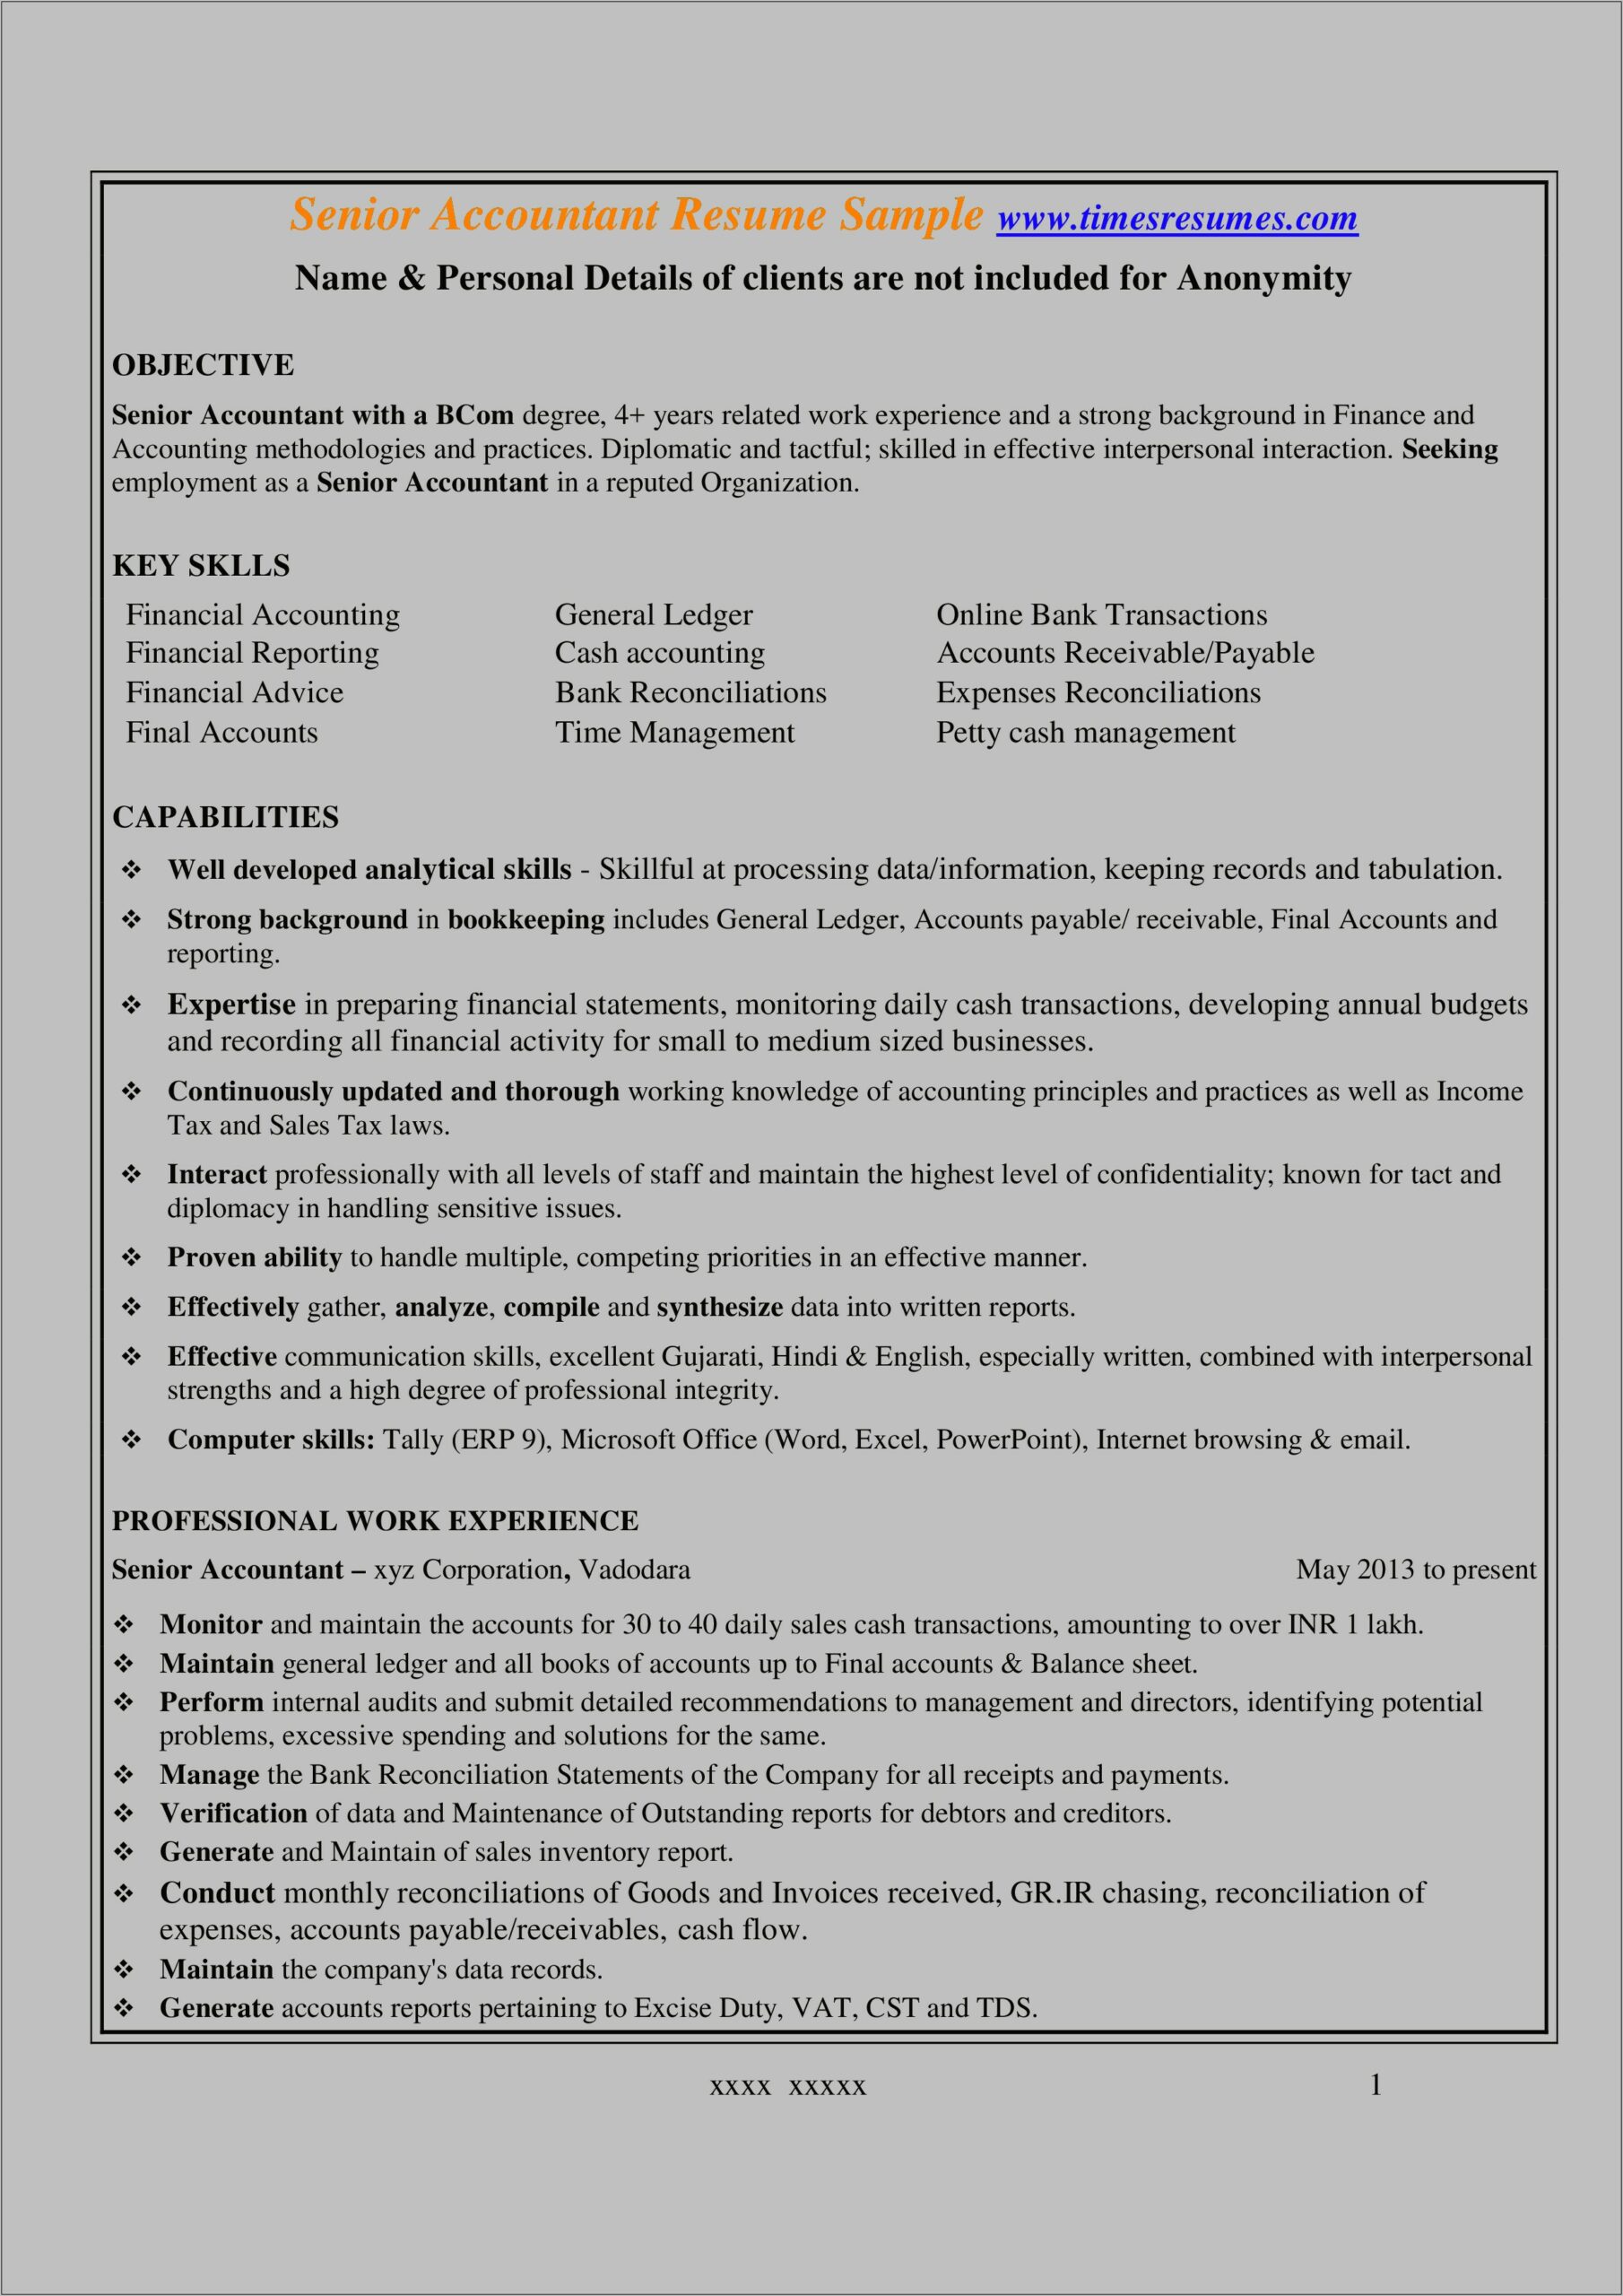 Sample Resume For Experienced Senior Accountant